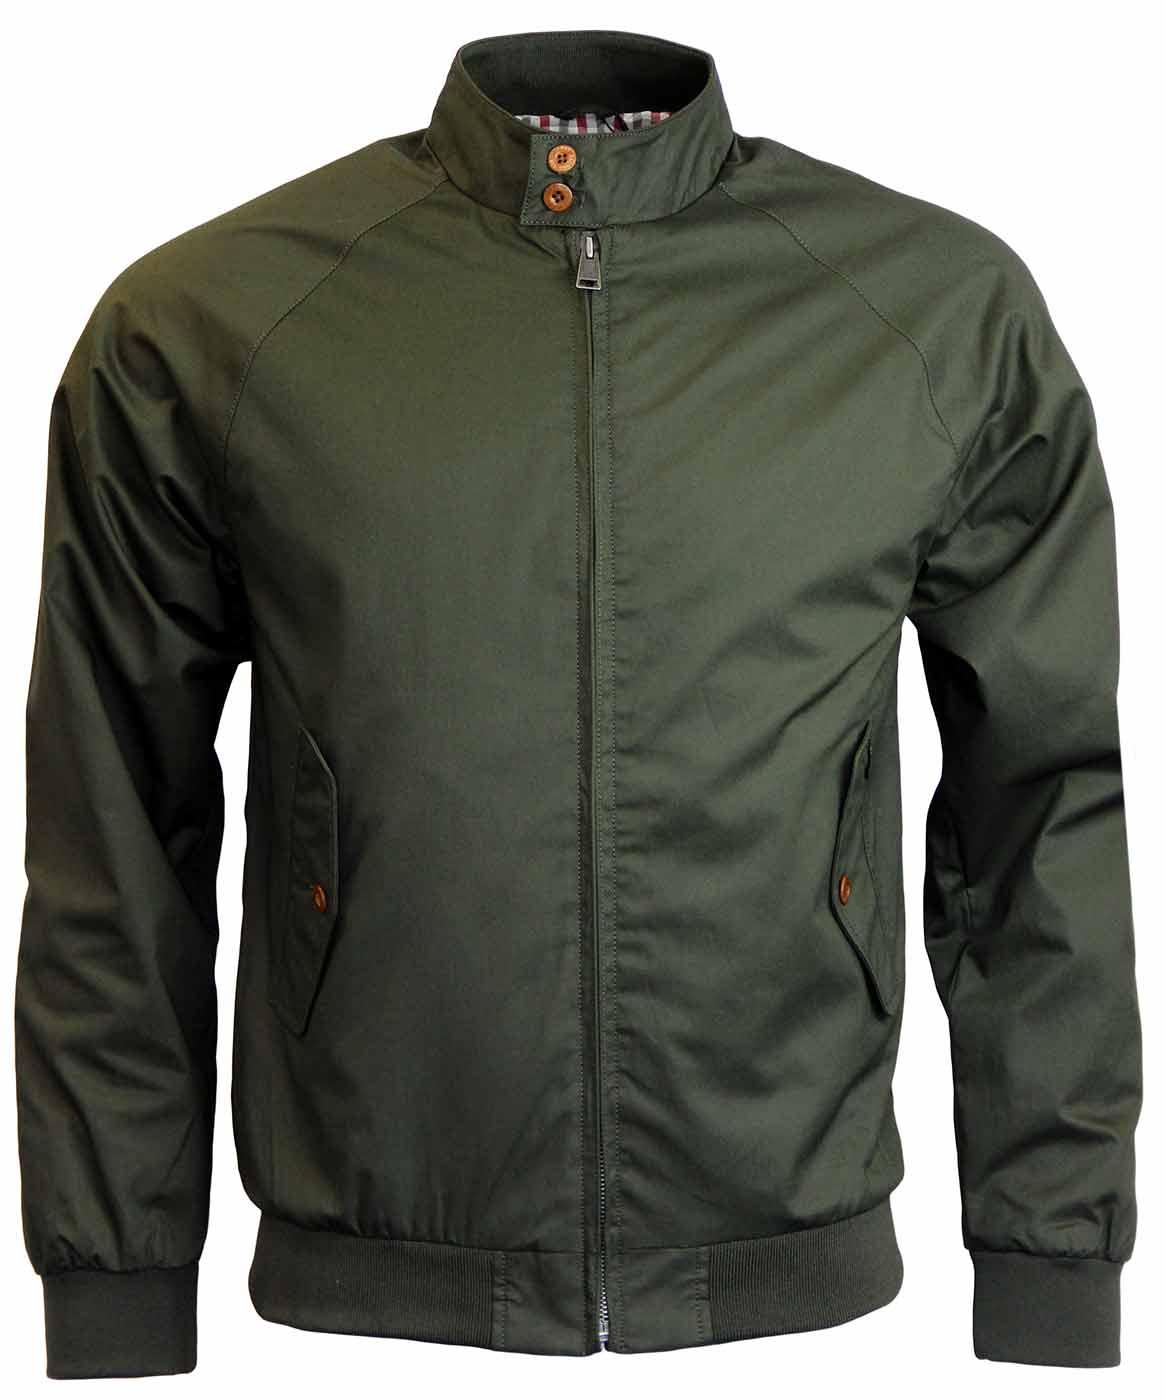 BEN SHERMAN Retro Mod Harrington Jacket In Peat Green